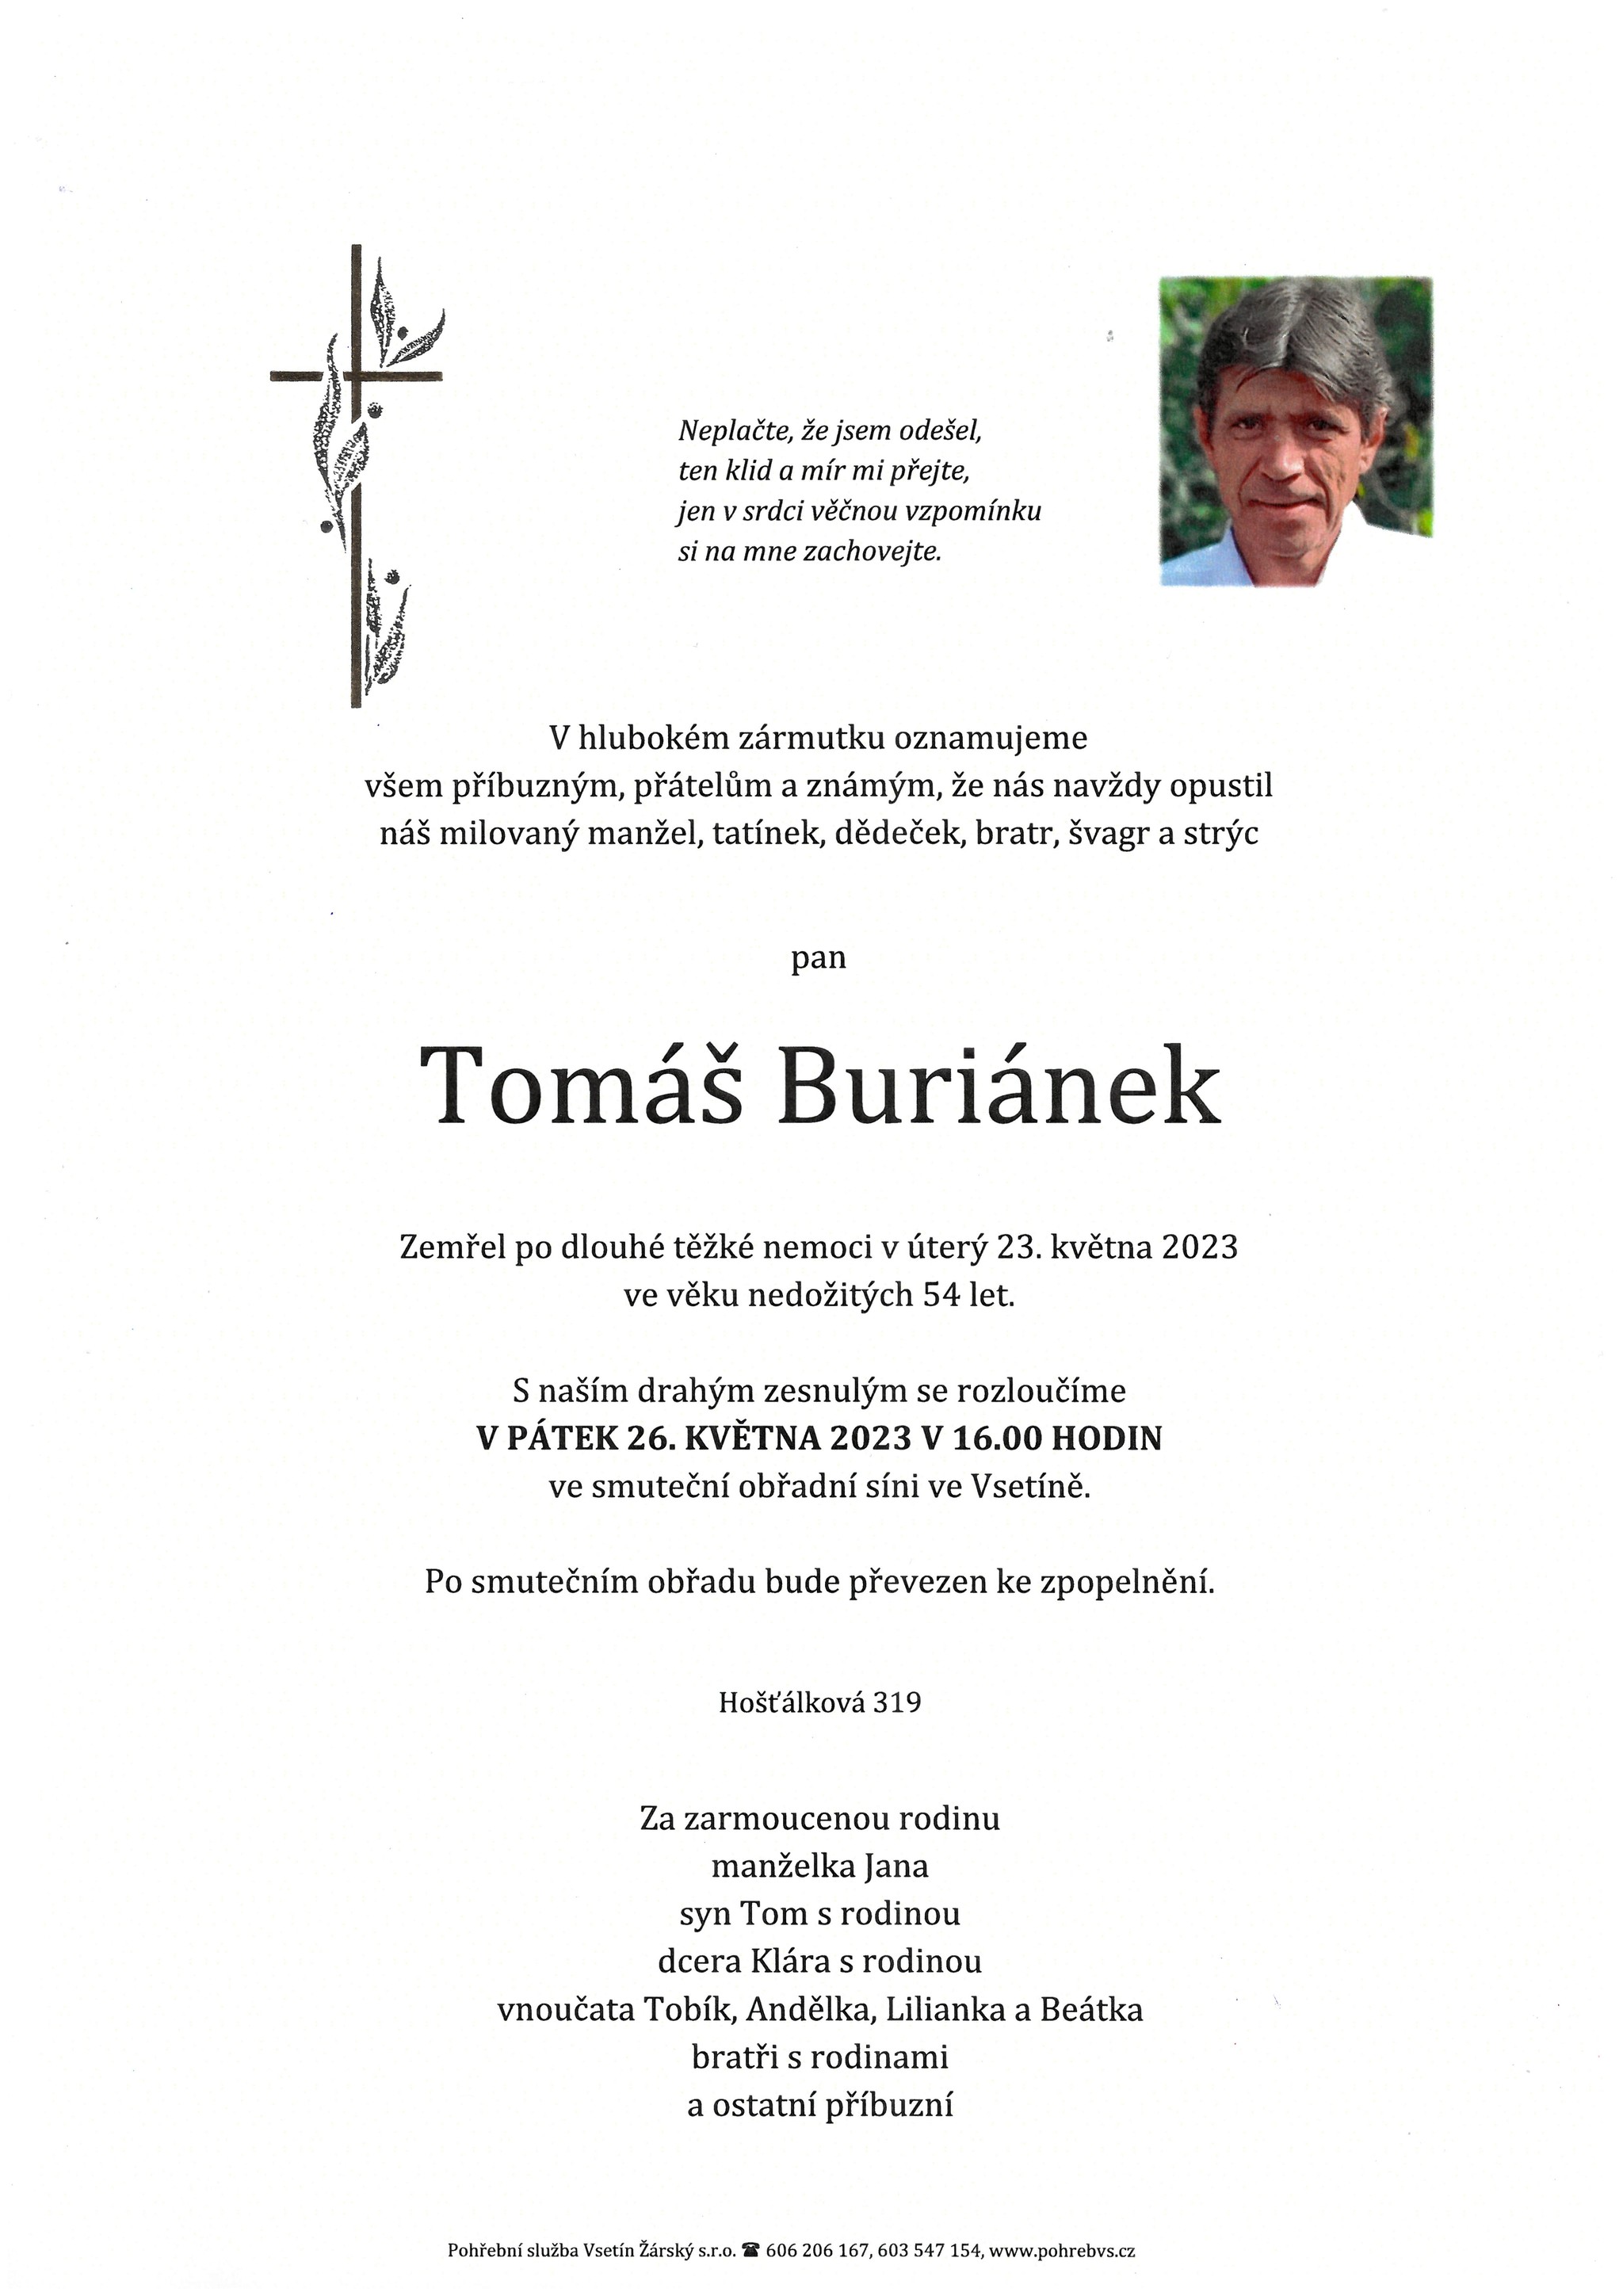 Tomáš Buriánek